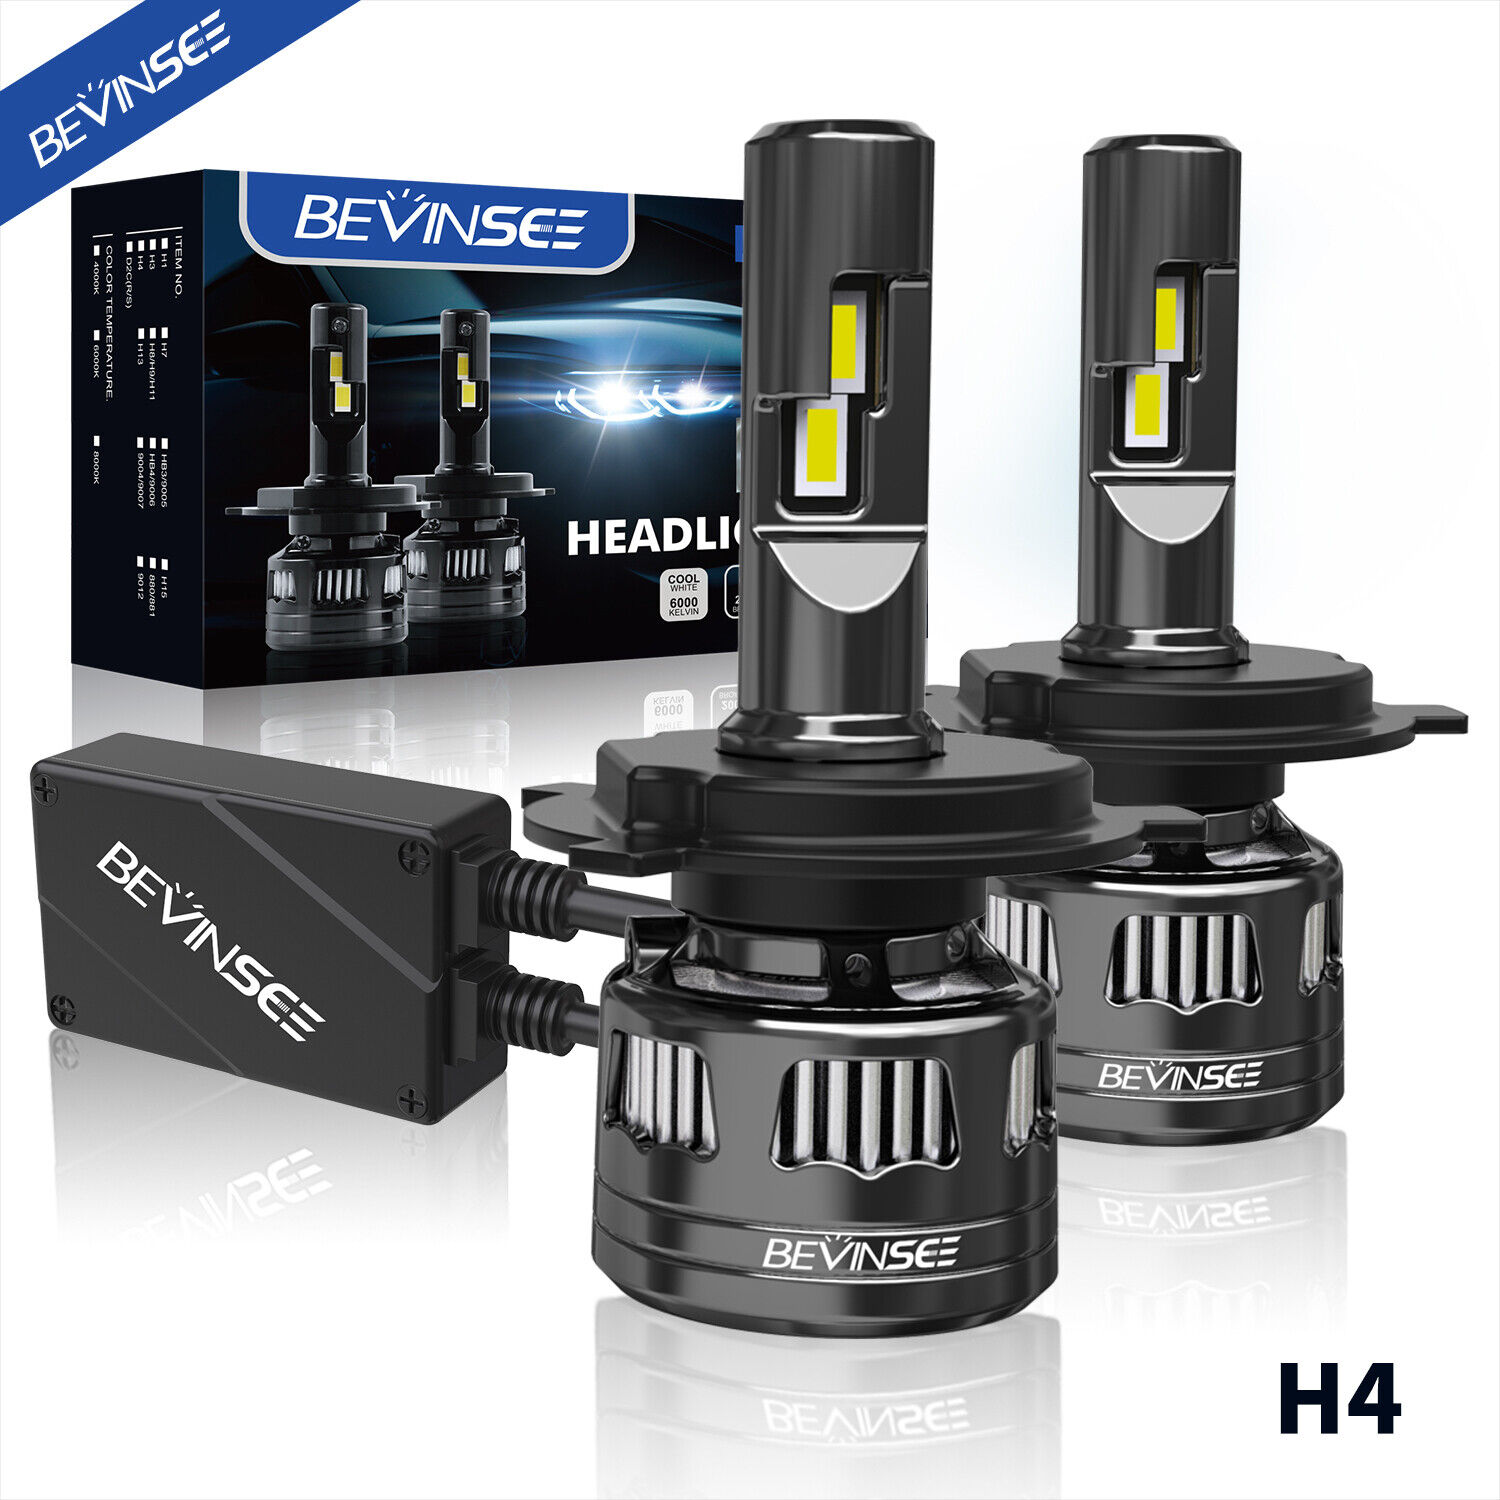 BEVINSEE H4 HB2 9003 LED Headlight Hi/Low Beam Bulbs Conversion Kit 30000LM 120W